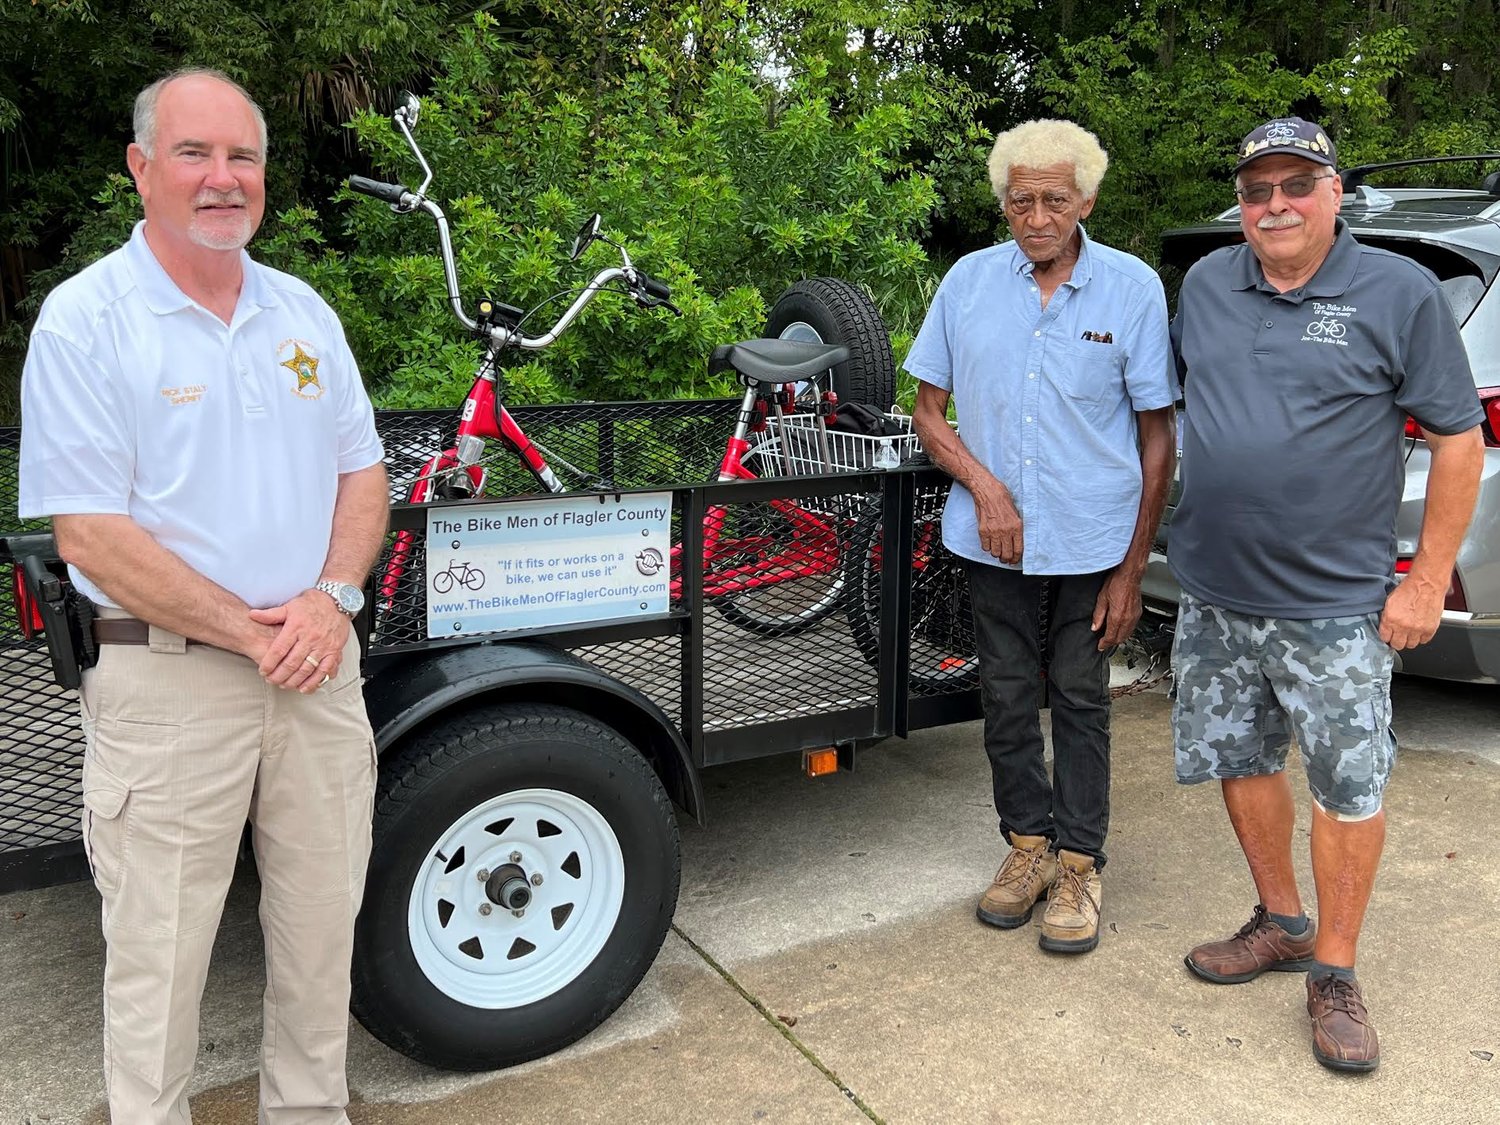 Sheriff Rick Staly, Francisco Diaz, and Joe Golan of the Bike Men of Flagler County.